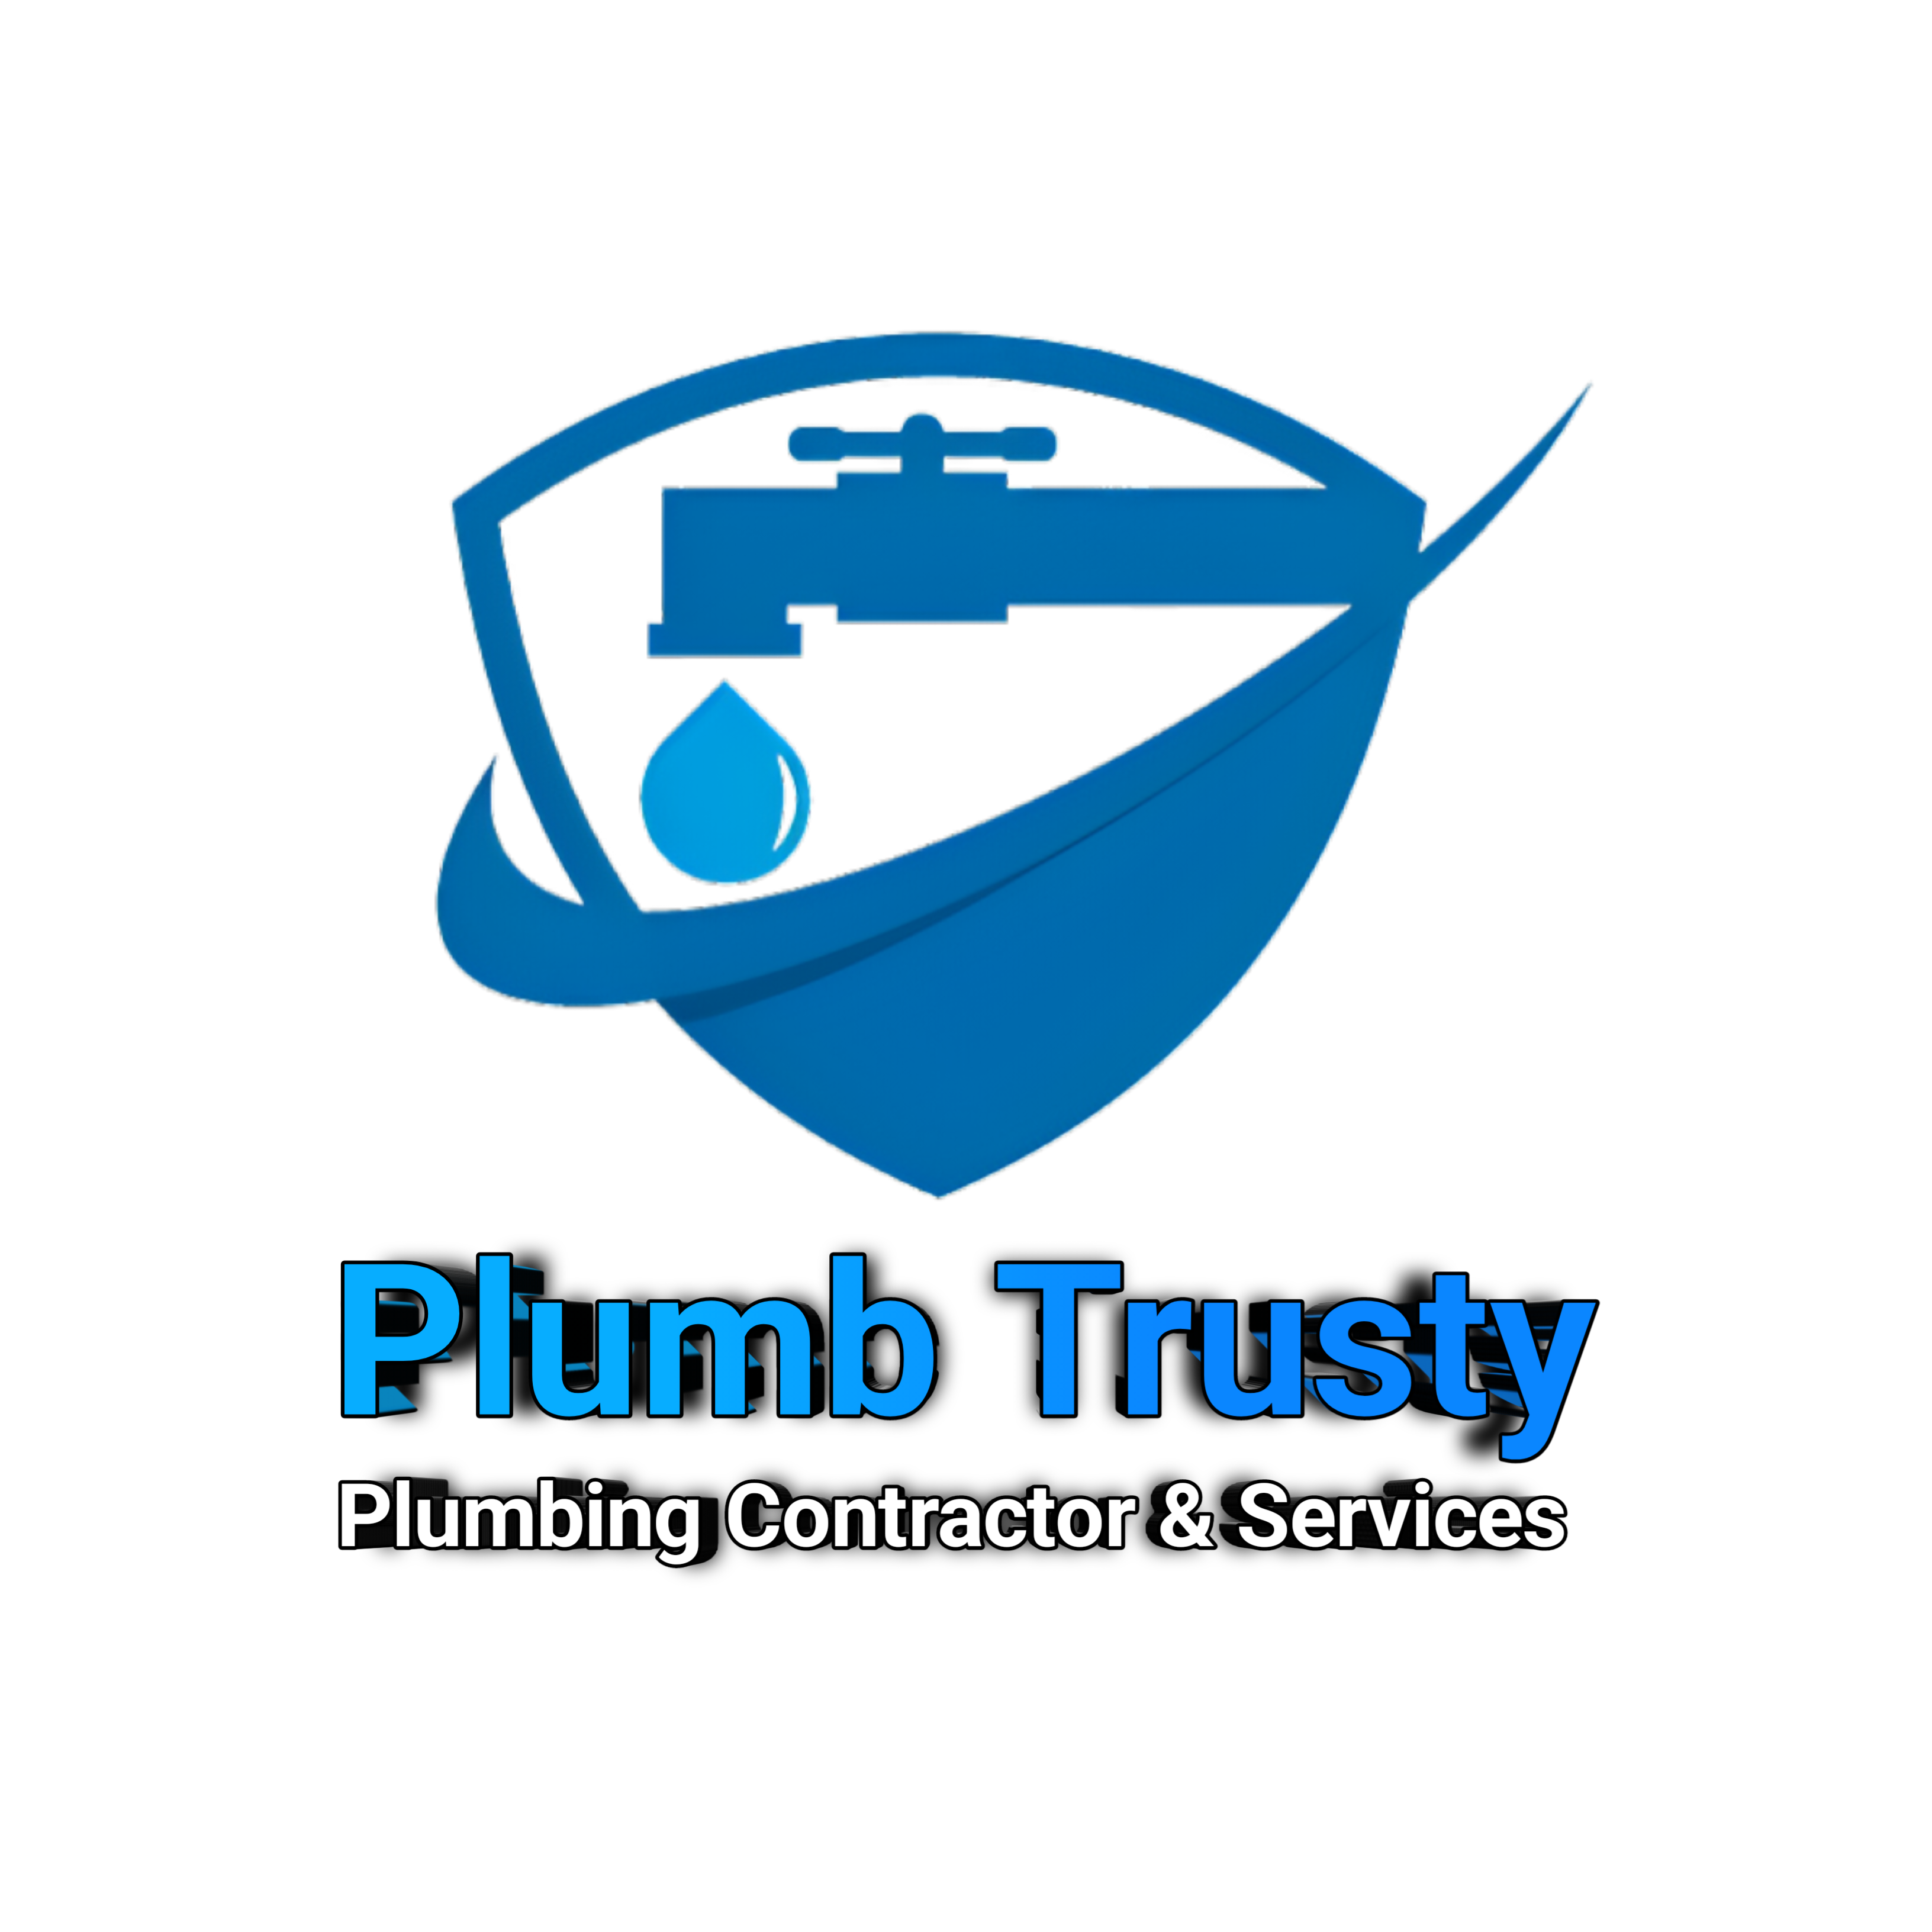 Plumb Trusty